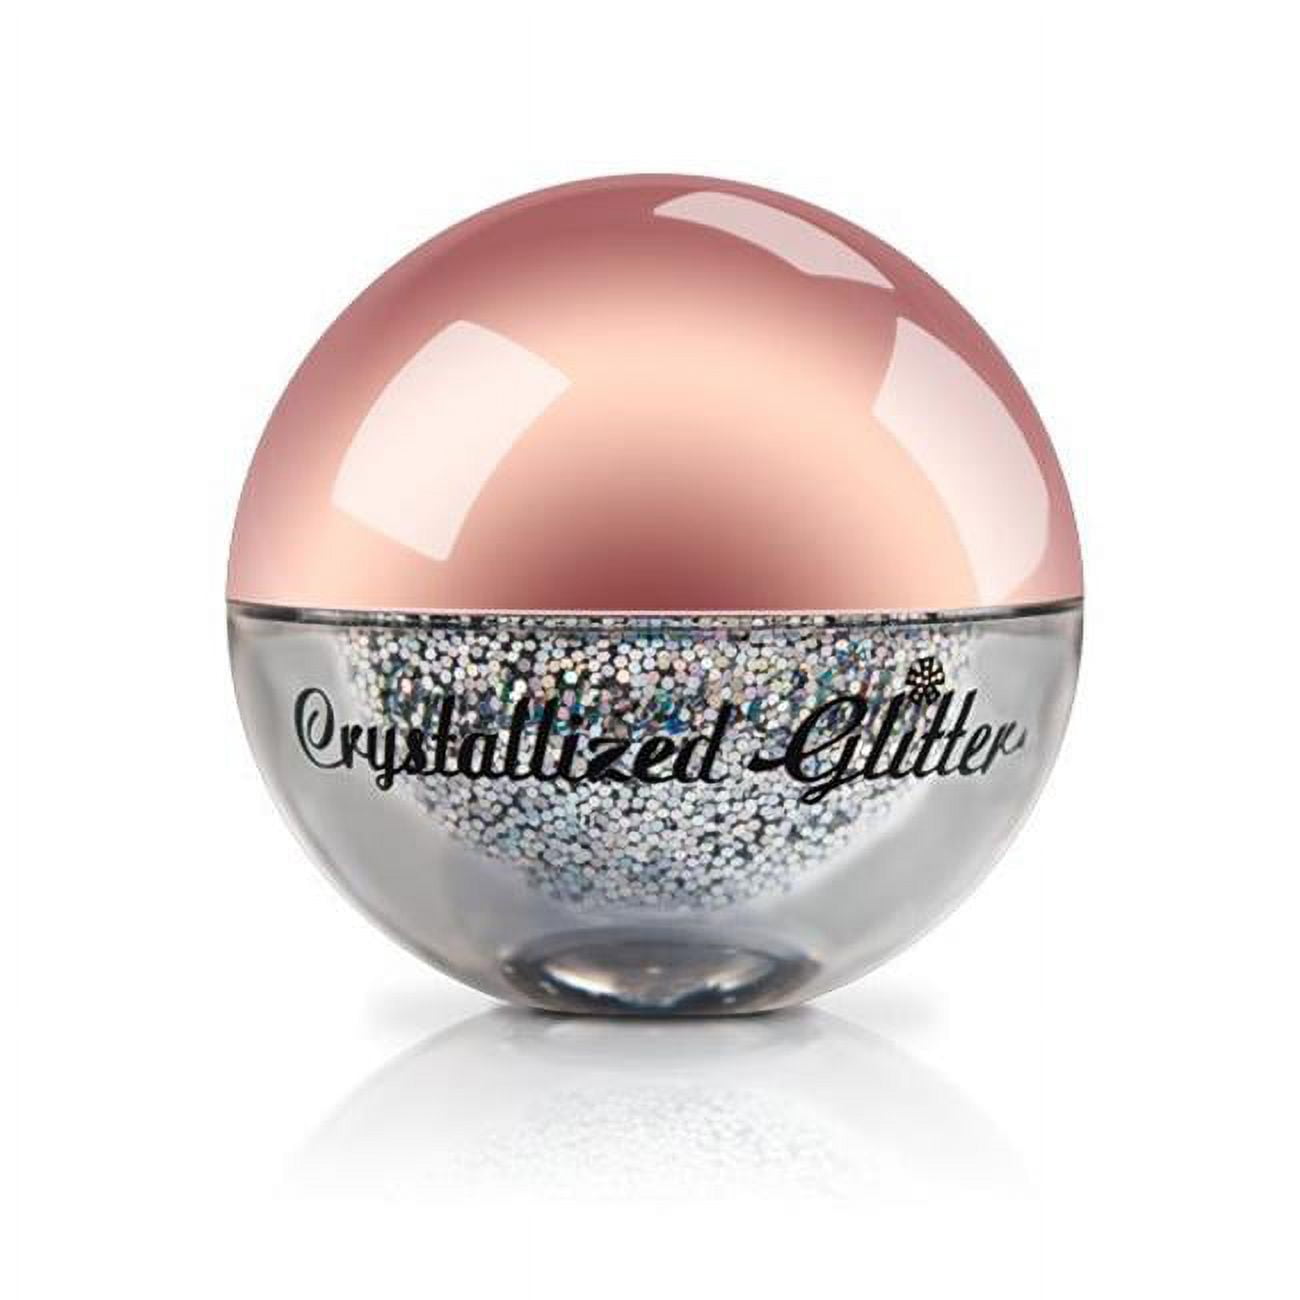 16512-fuzzyflamingo Cosmetics Eyeshadow Loose Crystallized Glitter, Fuzzy Flamingo